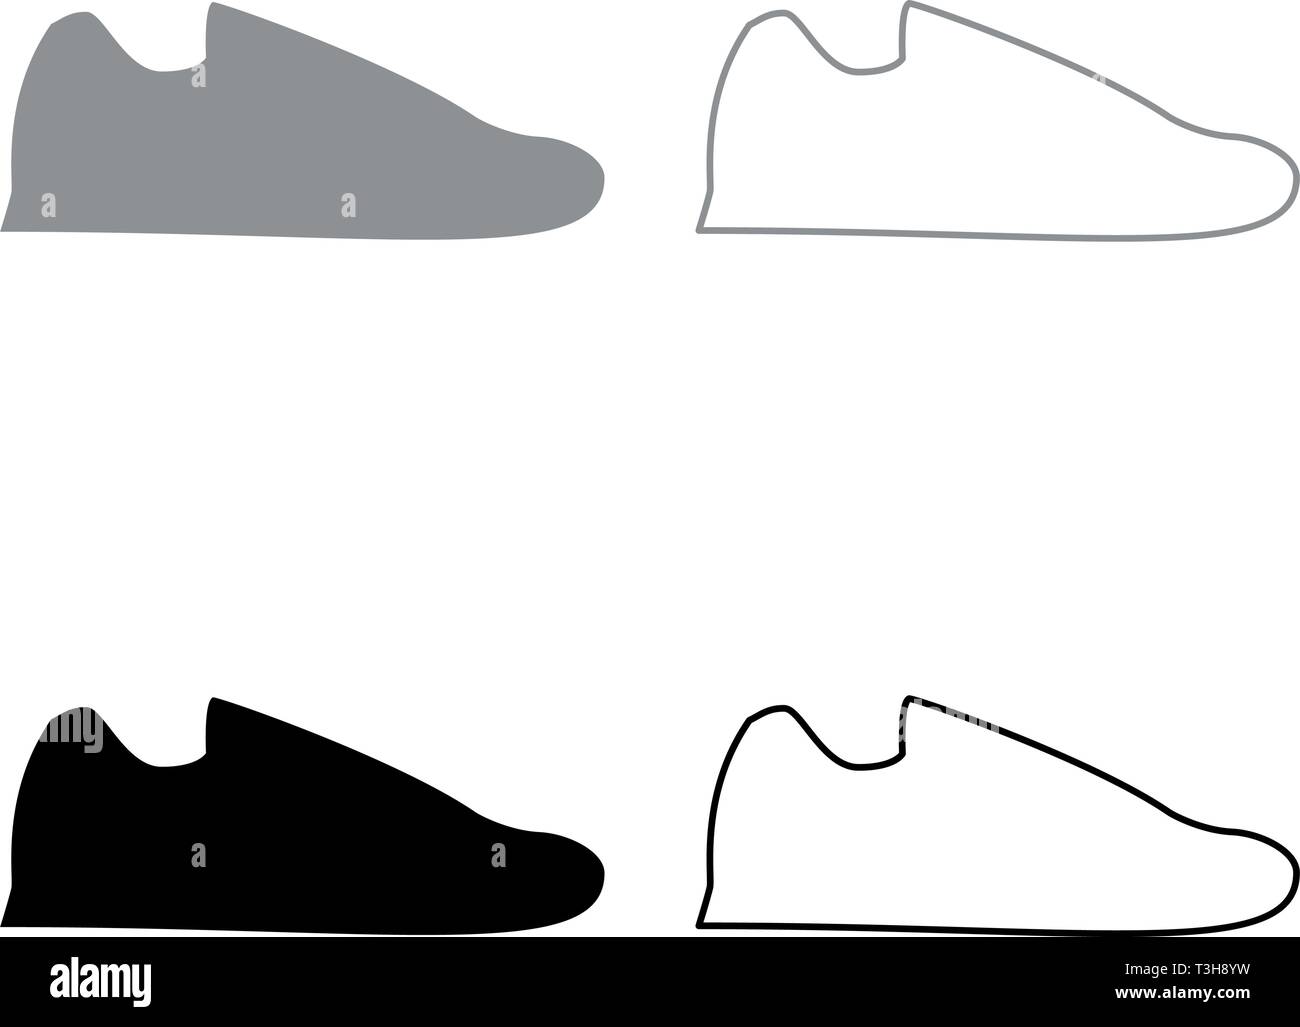 Laufschuhe Sneaker Sport Schuhe schuh Symbol Run Set schwarz Grau Farbe Vektor-illustration Flat Style simple Image Stock Vektor